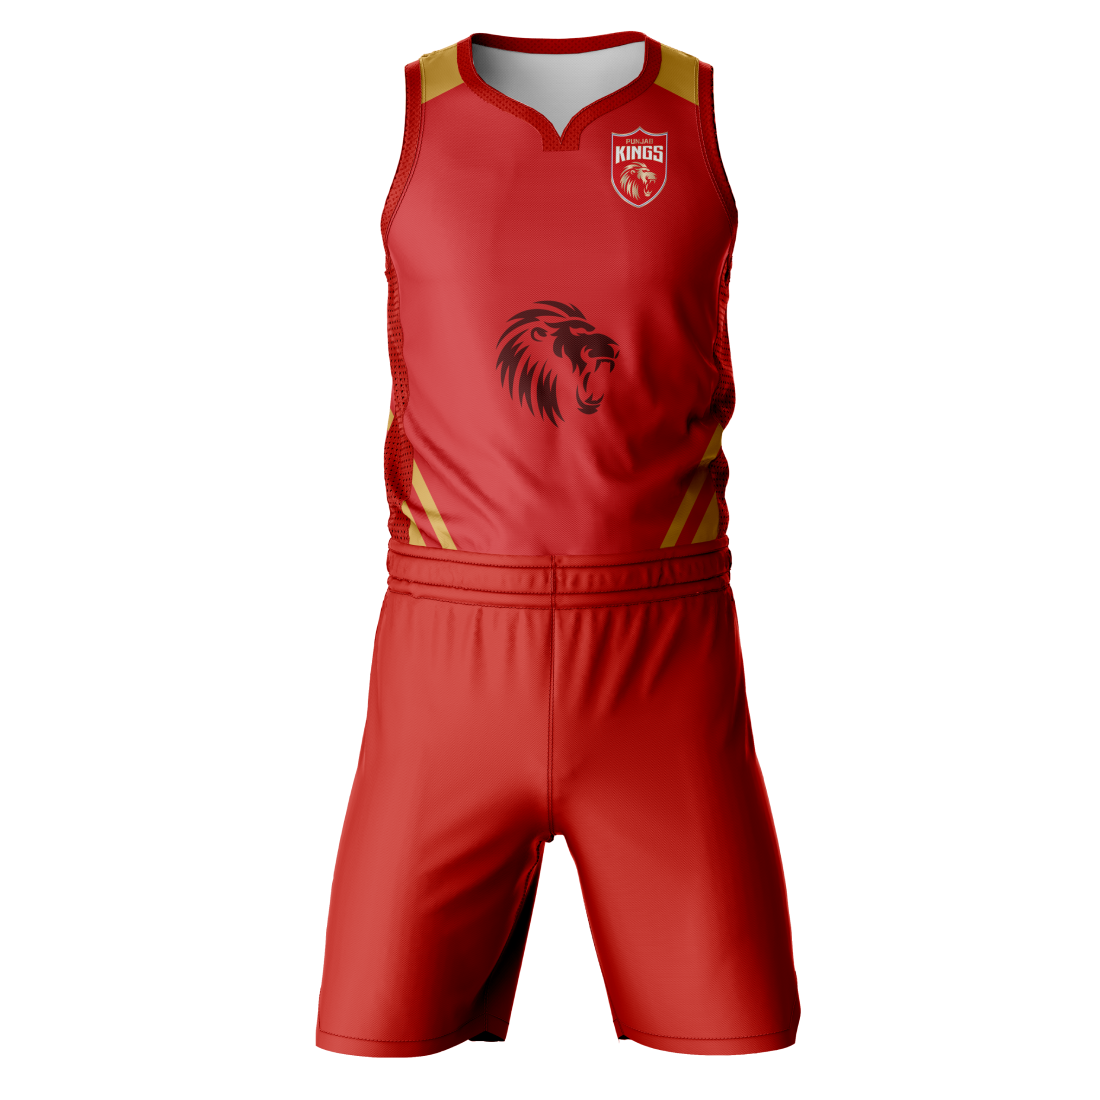 Next Print Ipl Punjab Design Basketball Jersey With Shorts